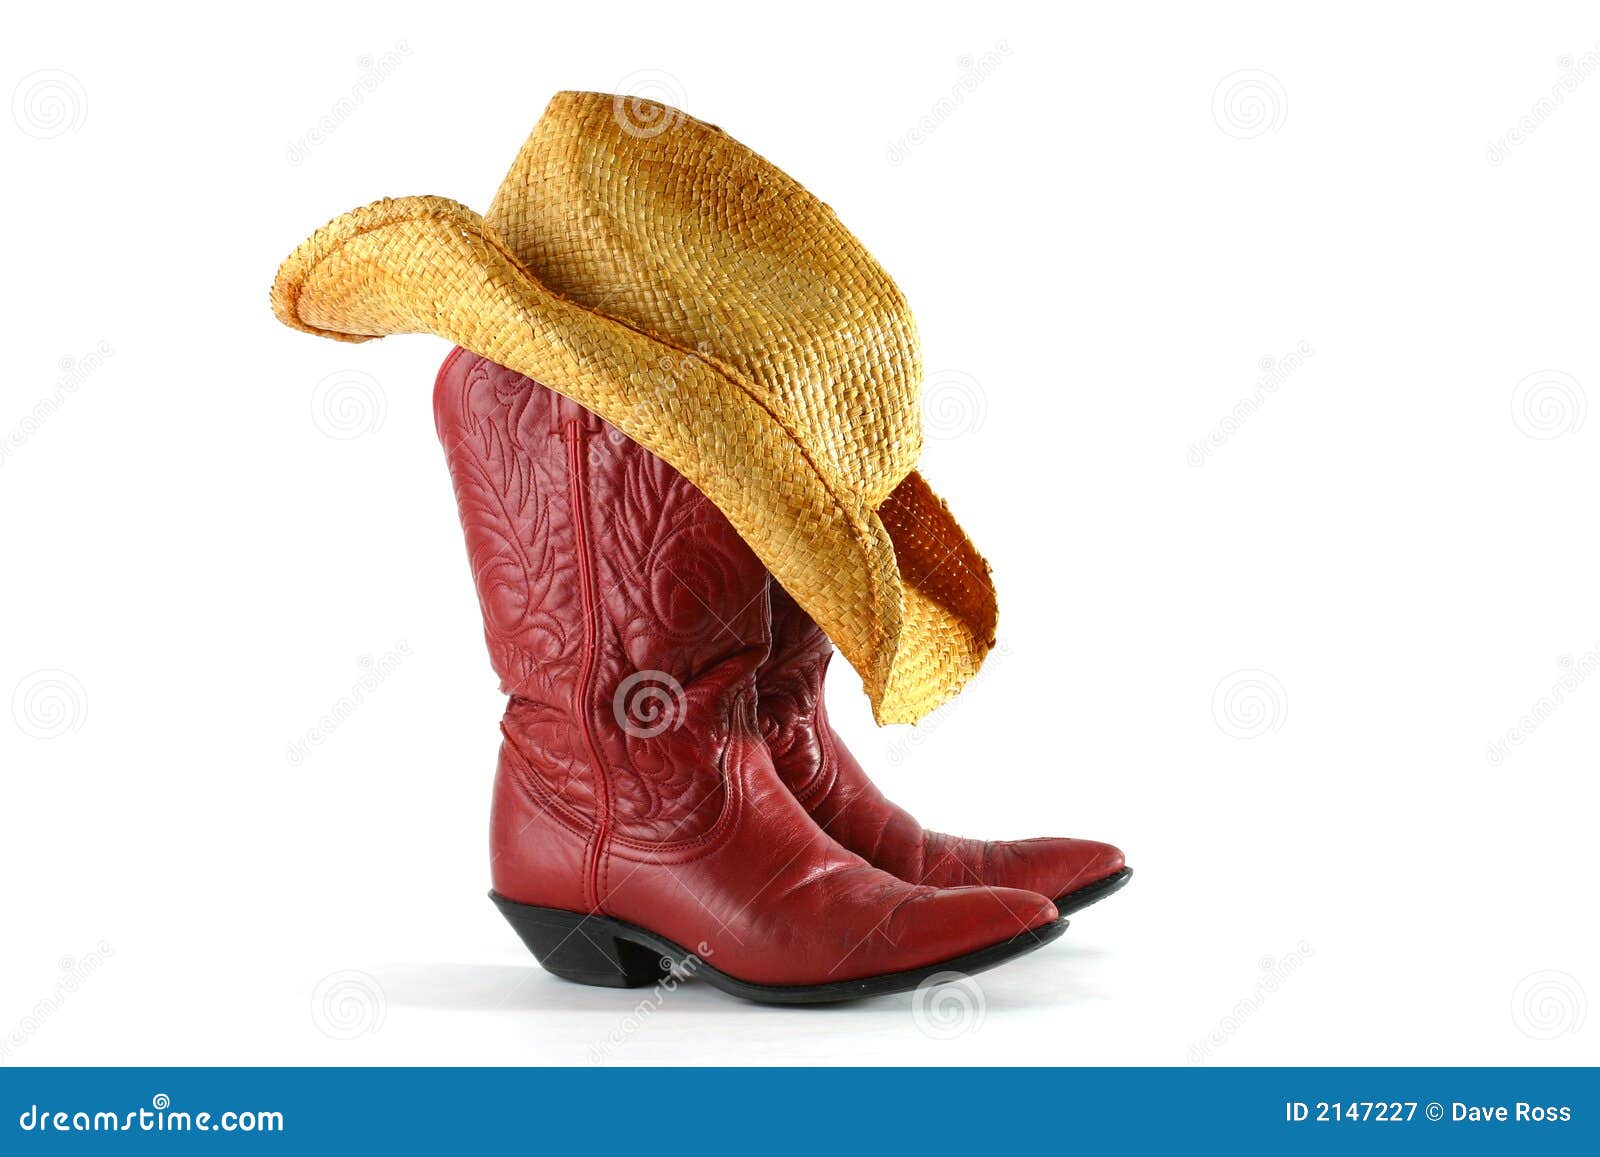 [Image: western-boots-hat-2147227.jpg]